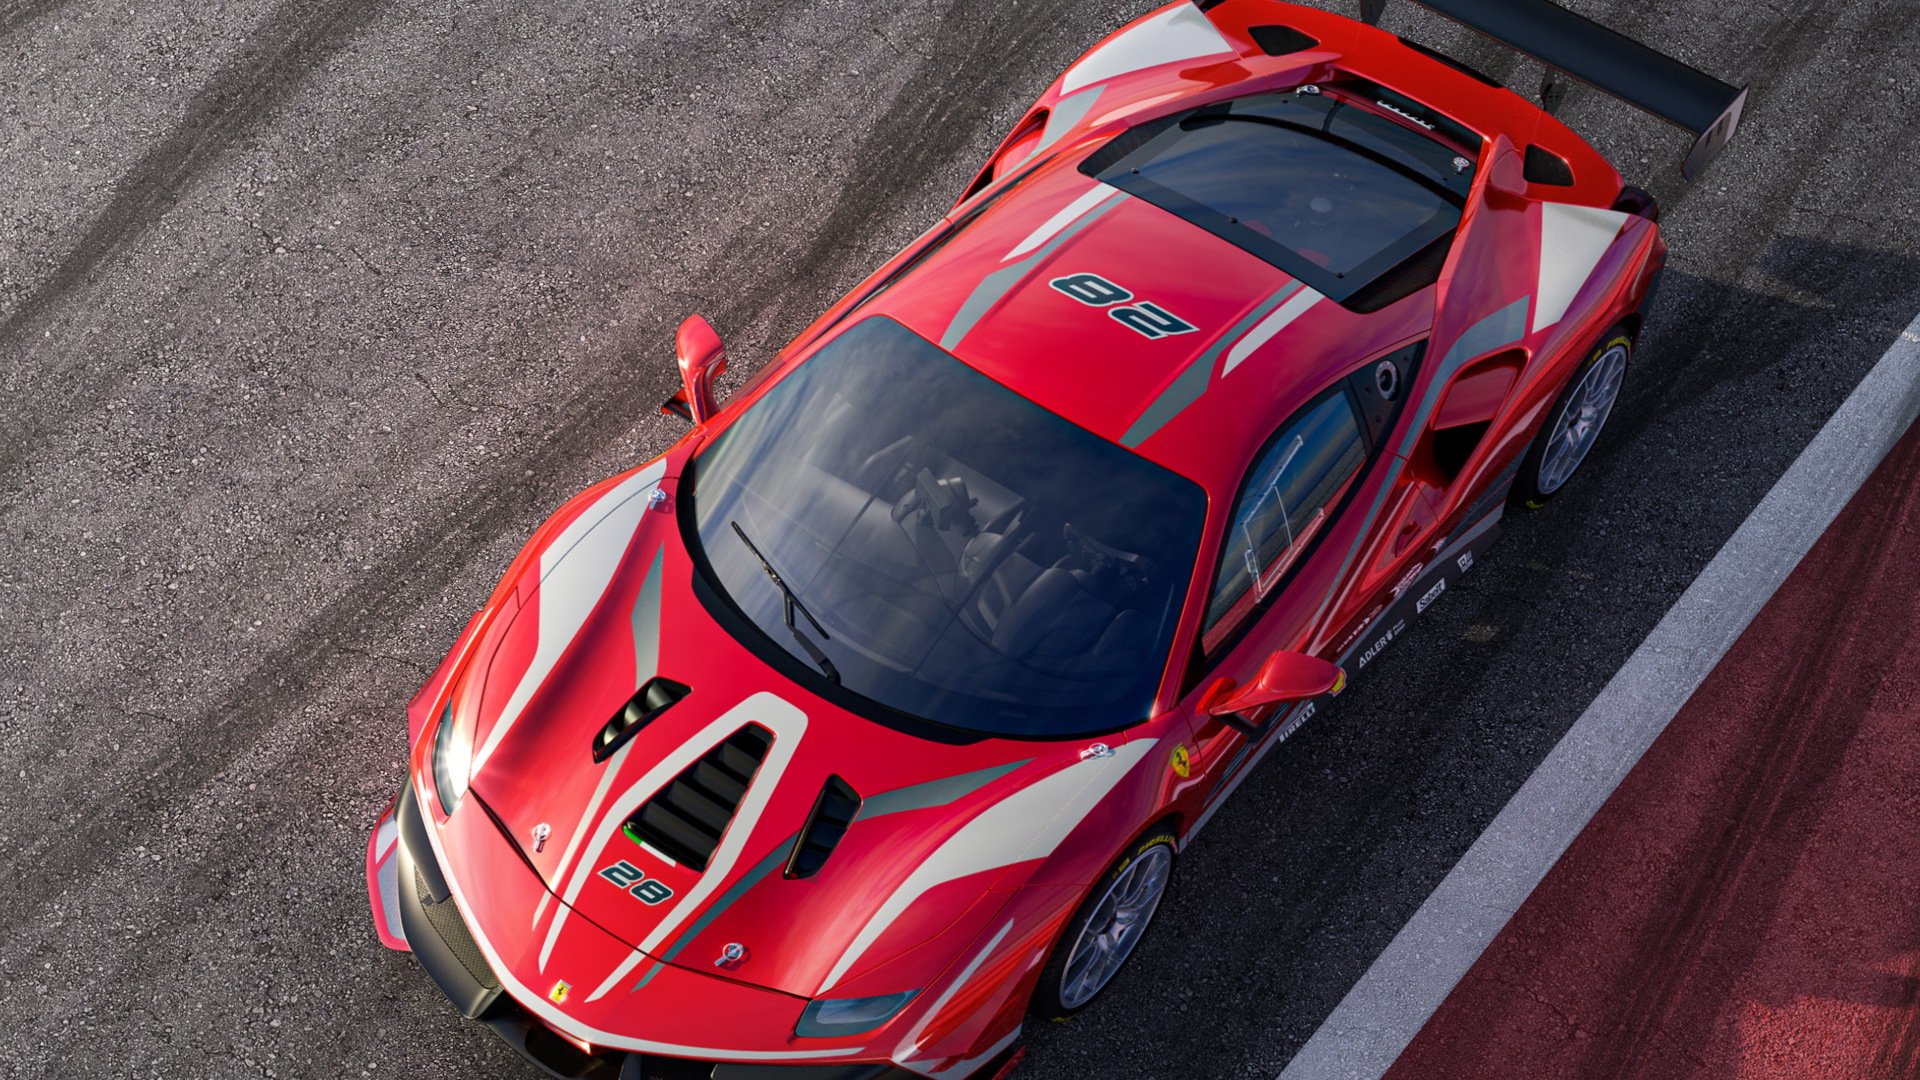 2020 Ferrari 488 Challenge Evo race car